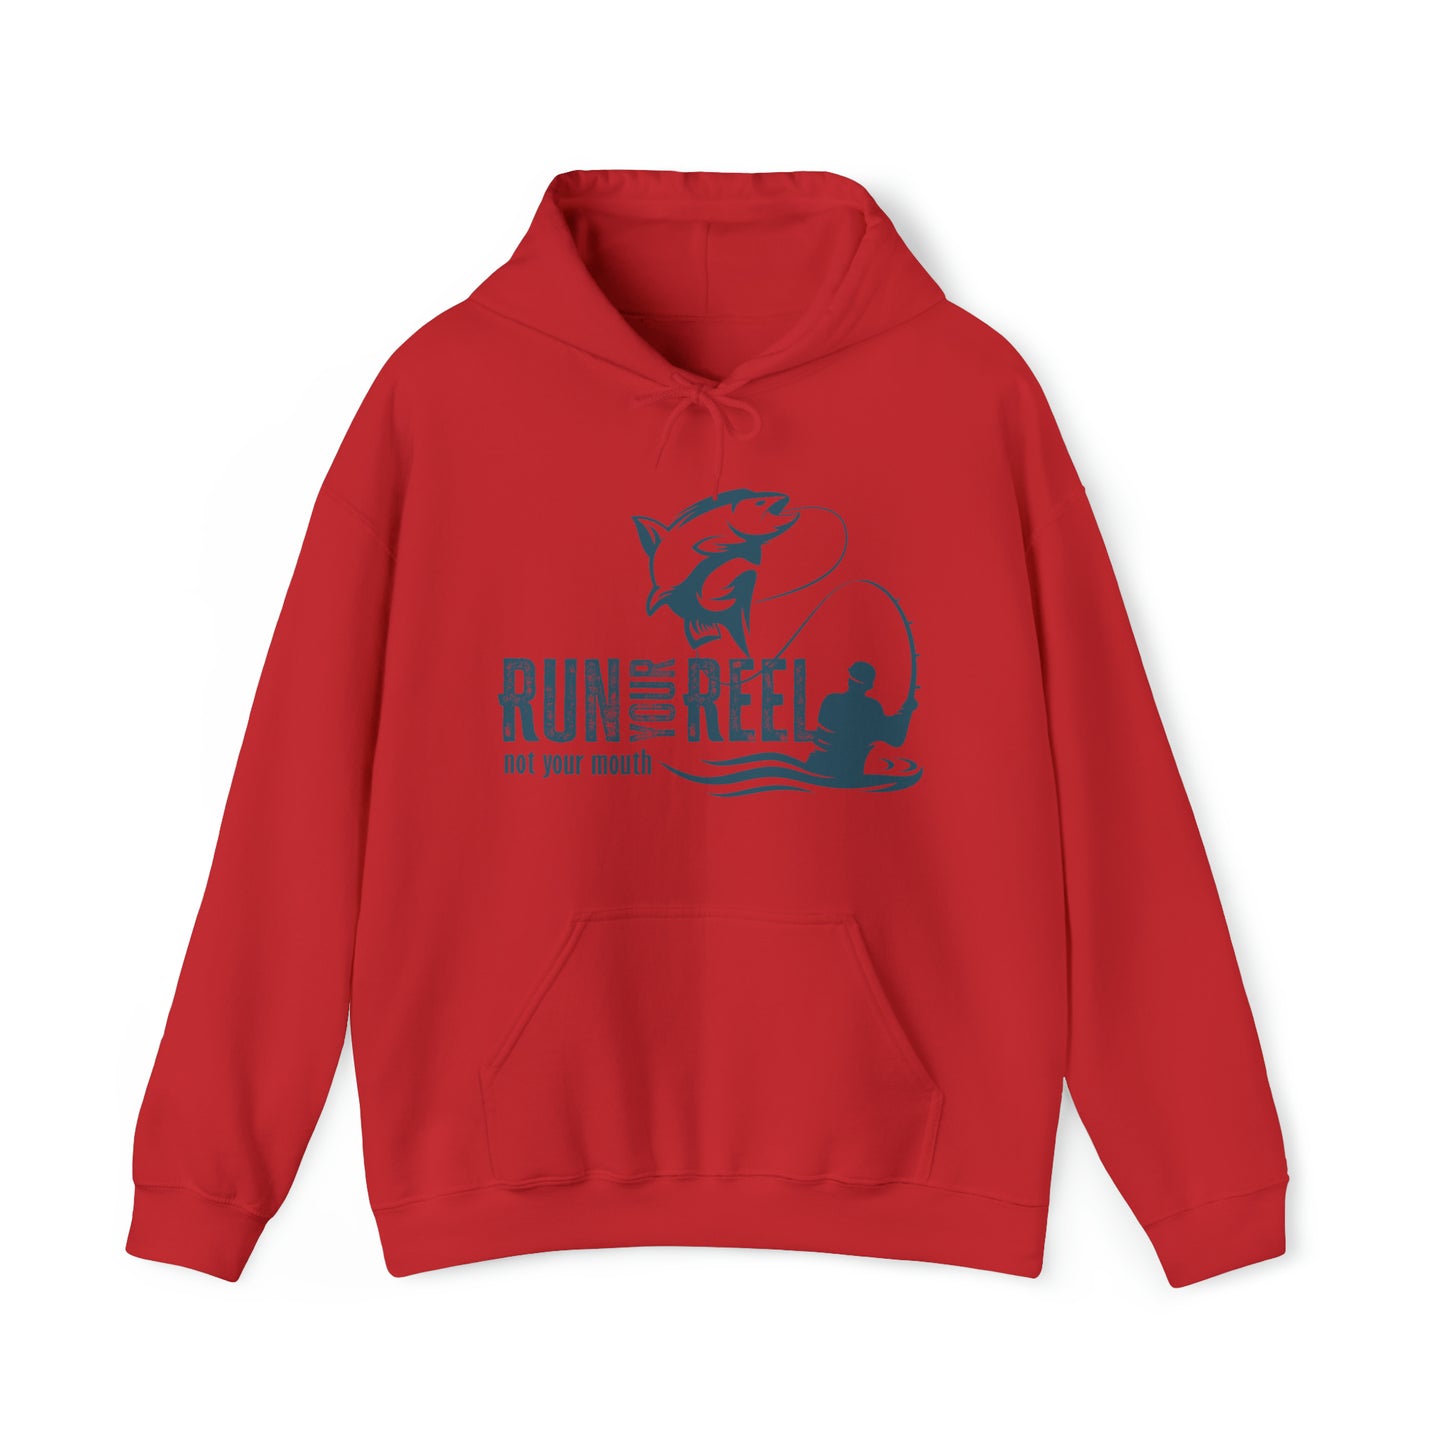 RUN YOUR REEL - 5 Unisex Heavy Blend™ Hooded Sweatshirt